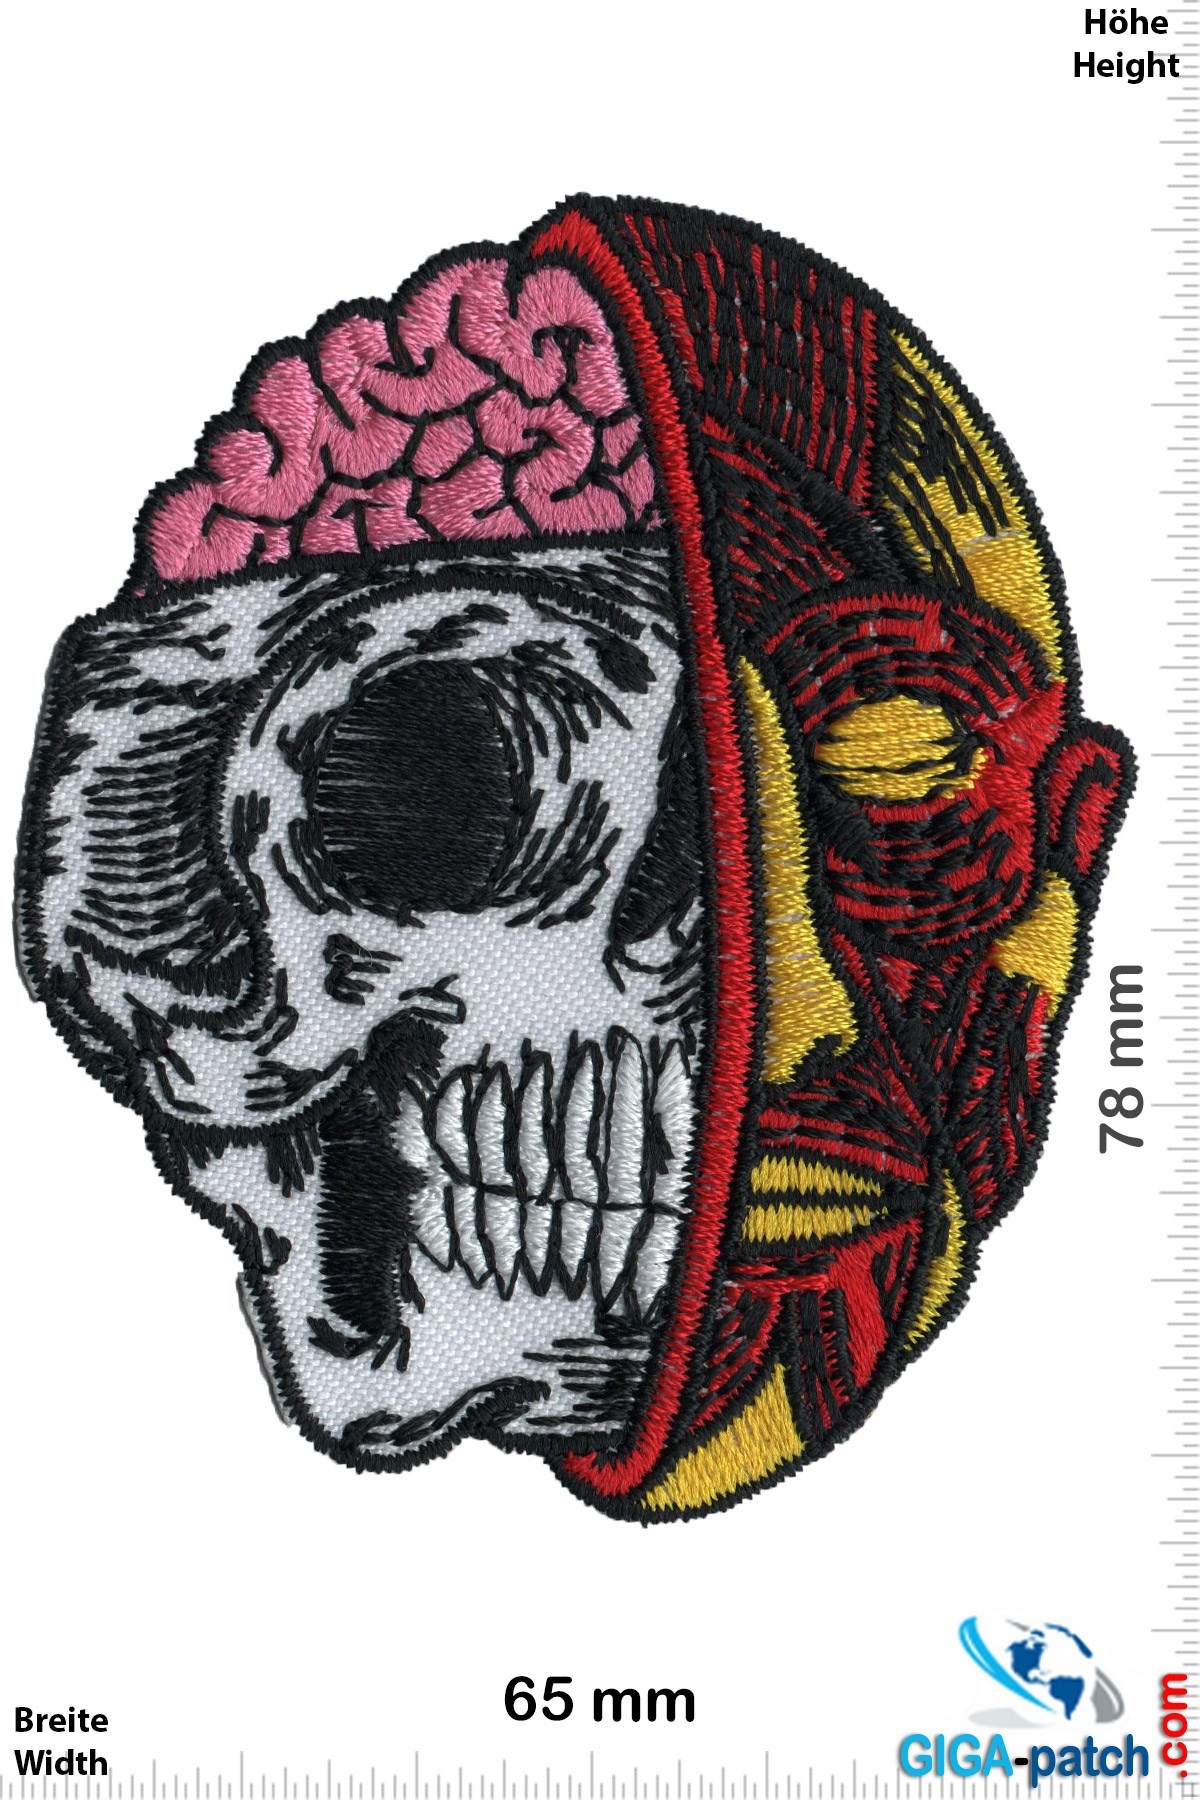 Totenkopf Half skull - half muscle - brain